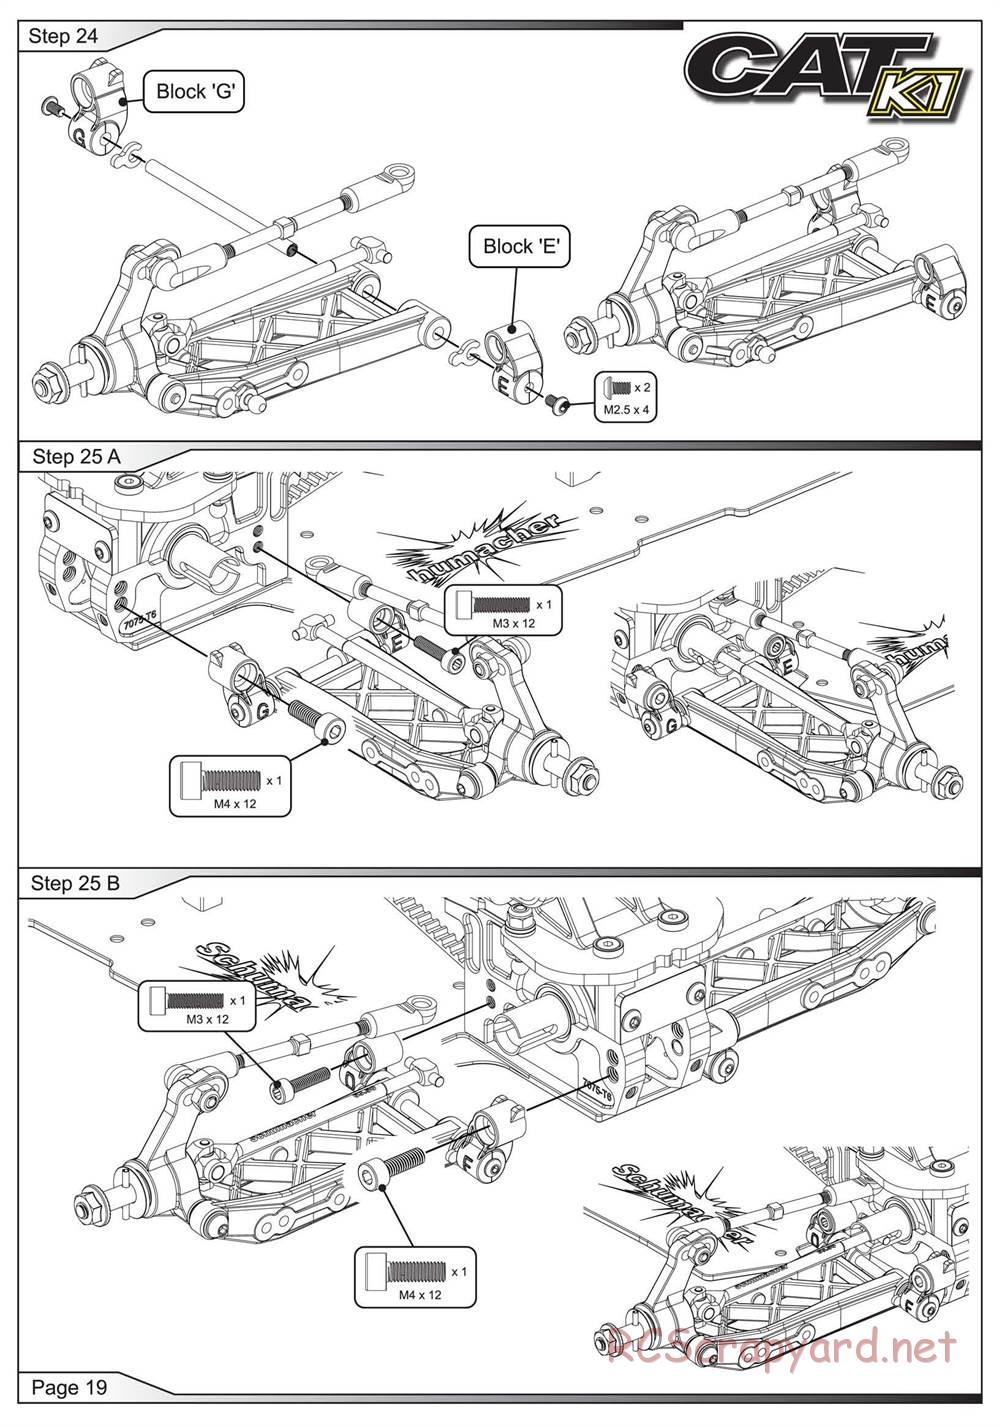 Schumacher - Cat K1 - Manual - Page 19